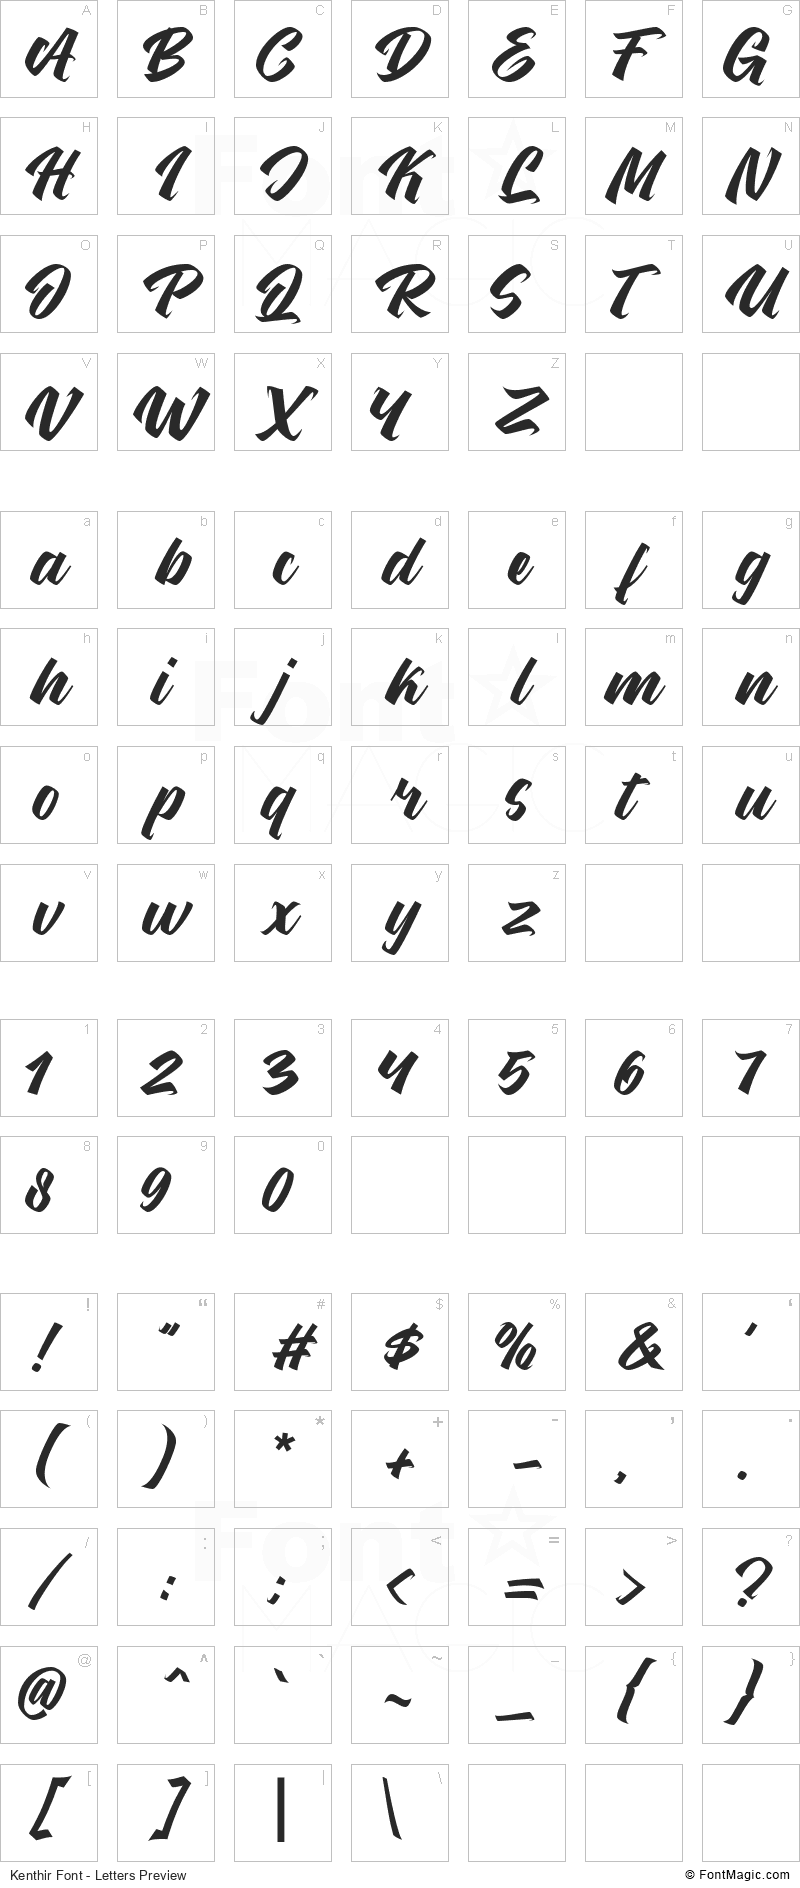 Kenthir Font - All Latters Preview Chart